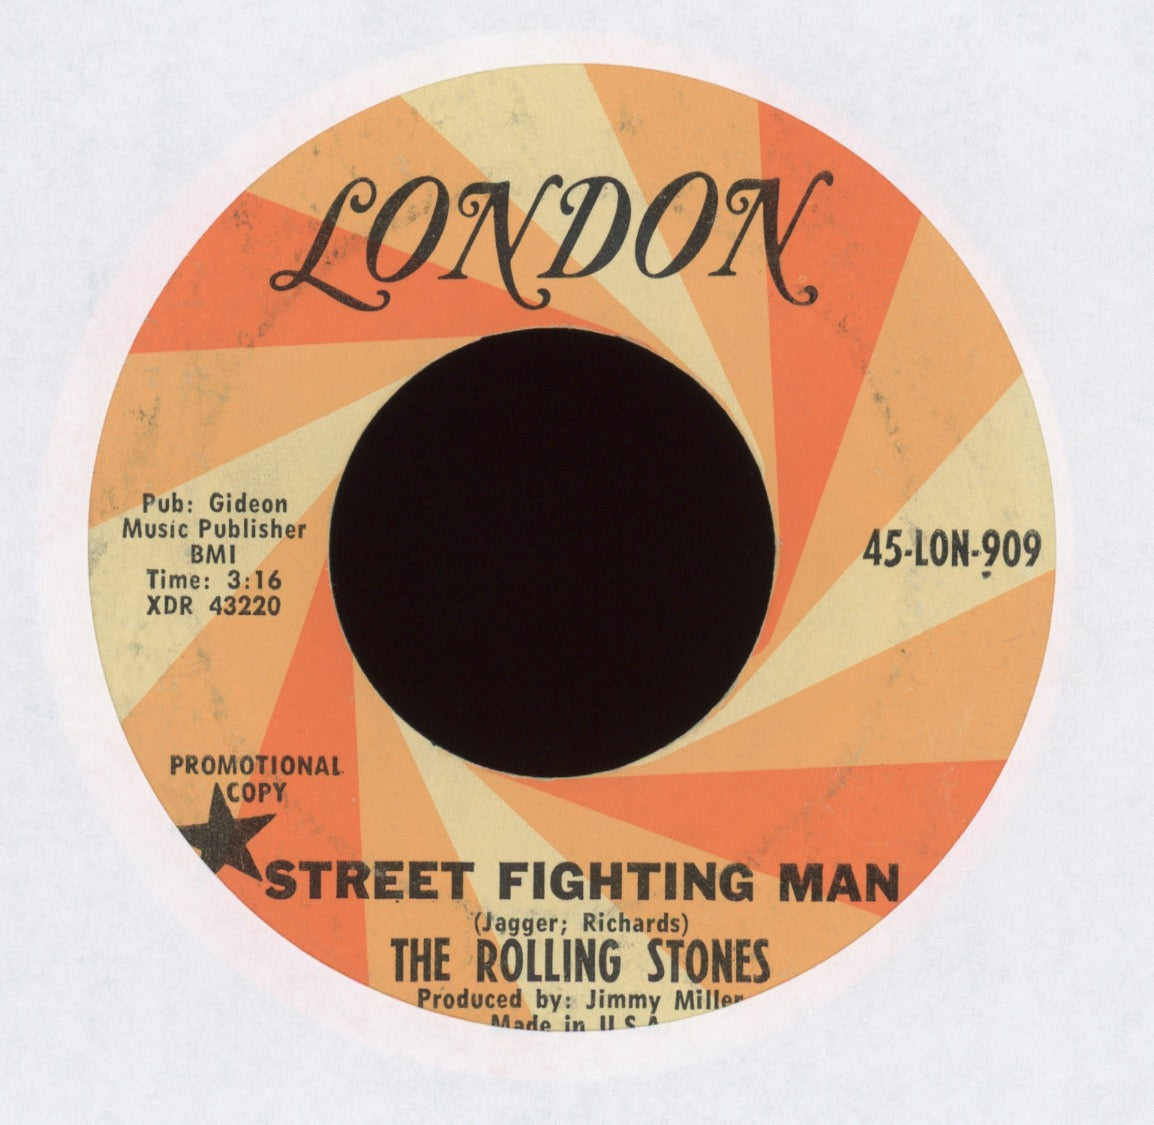 The Rolling Stones - Street Fighting Man on London Lon-909 Promo